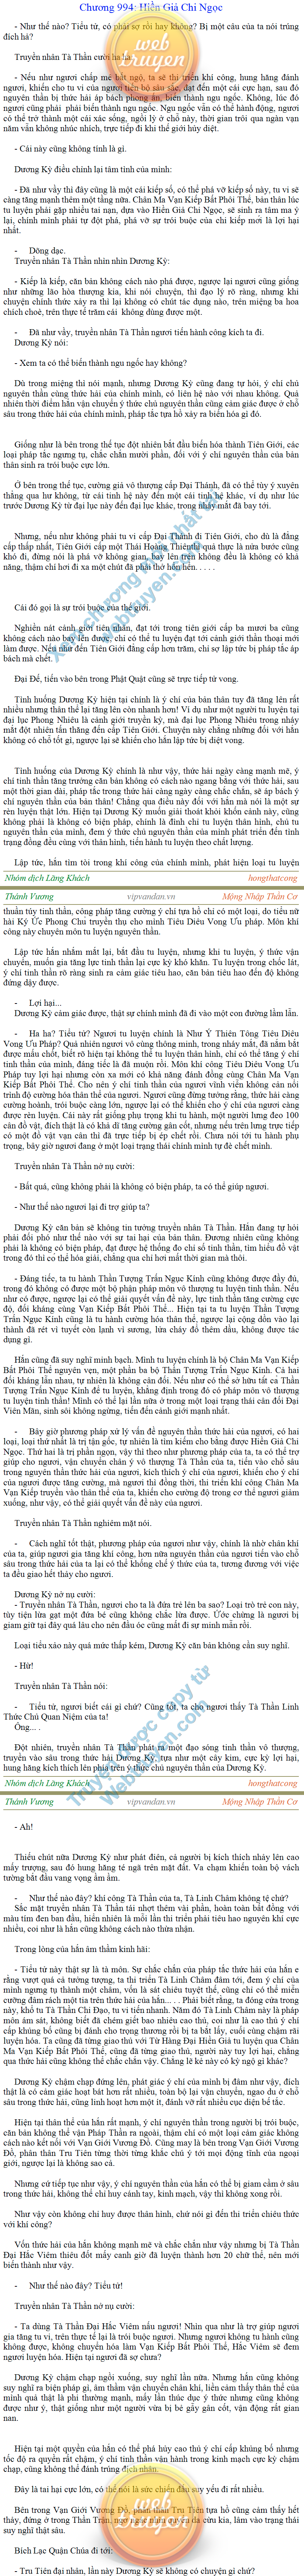 Thanh-vuong-994.png